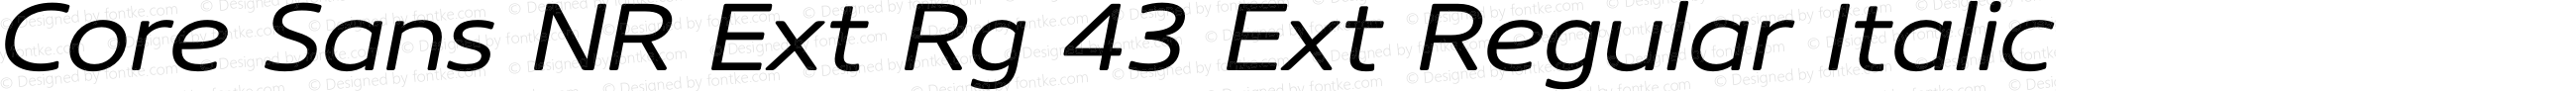 Core Sans NR Ext Rg 43 Ext Regular Italic